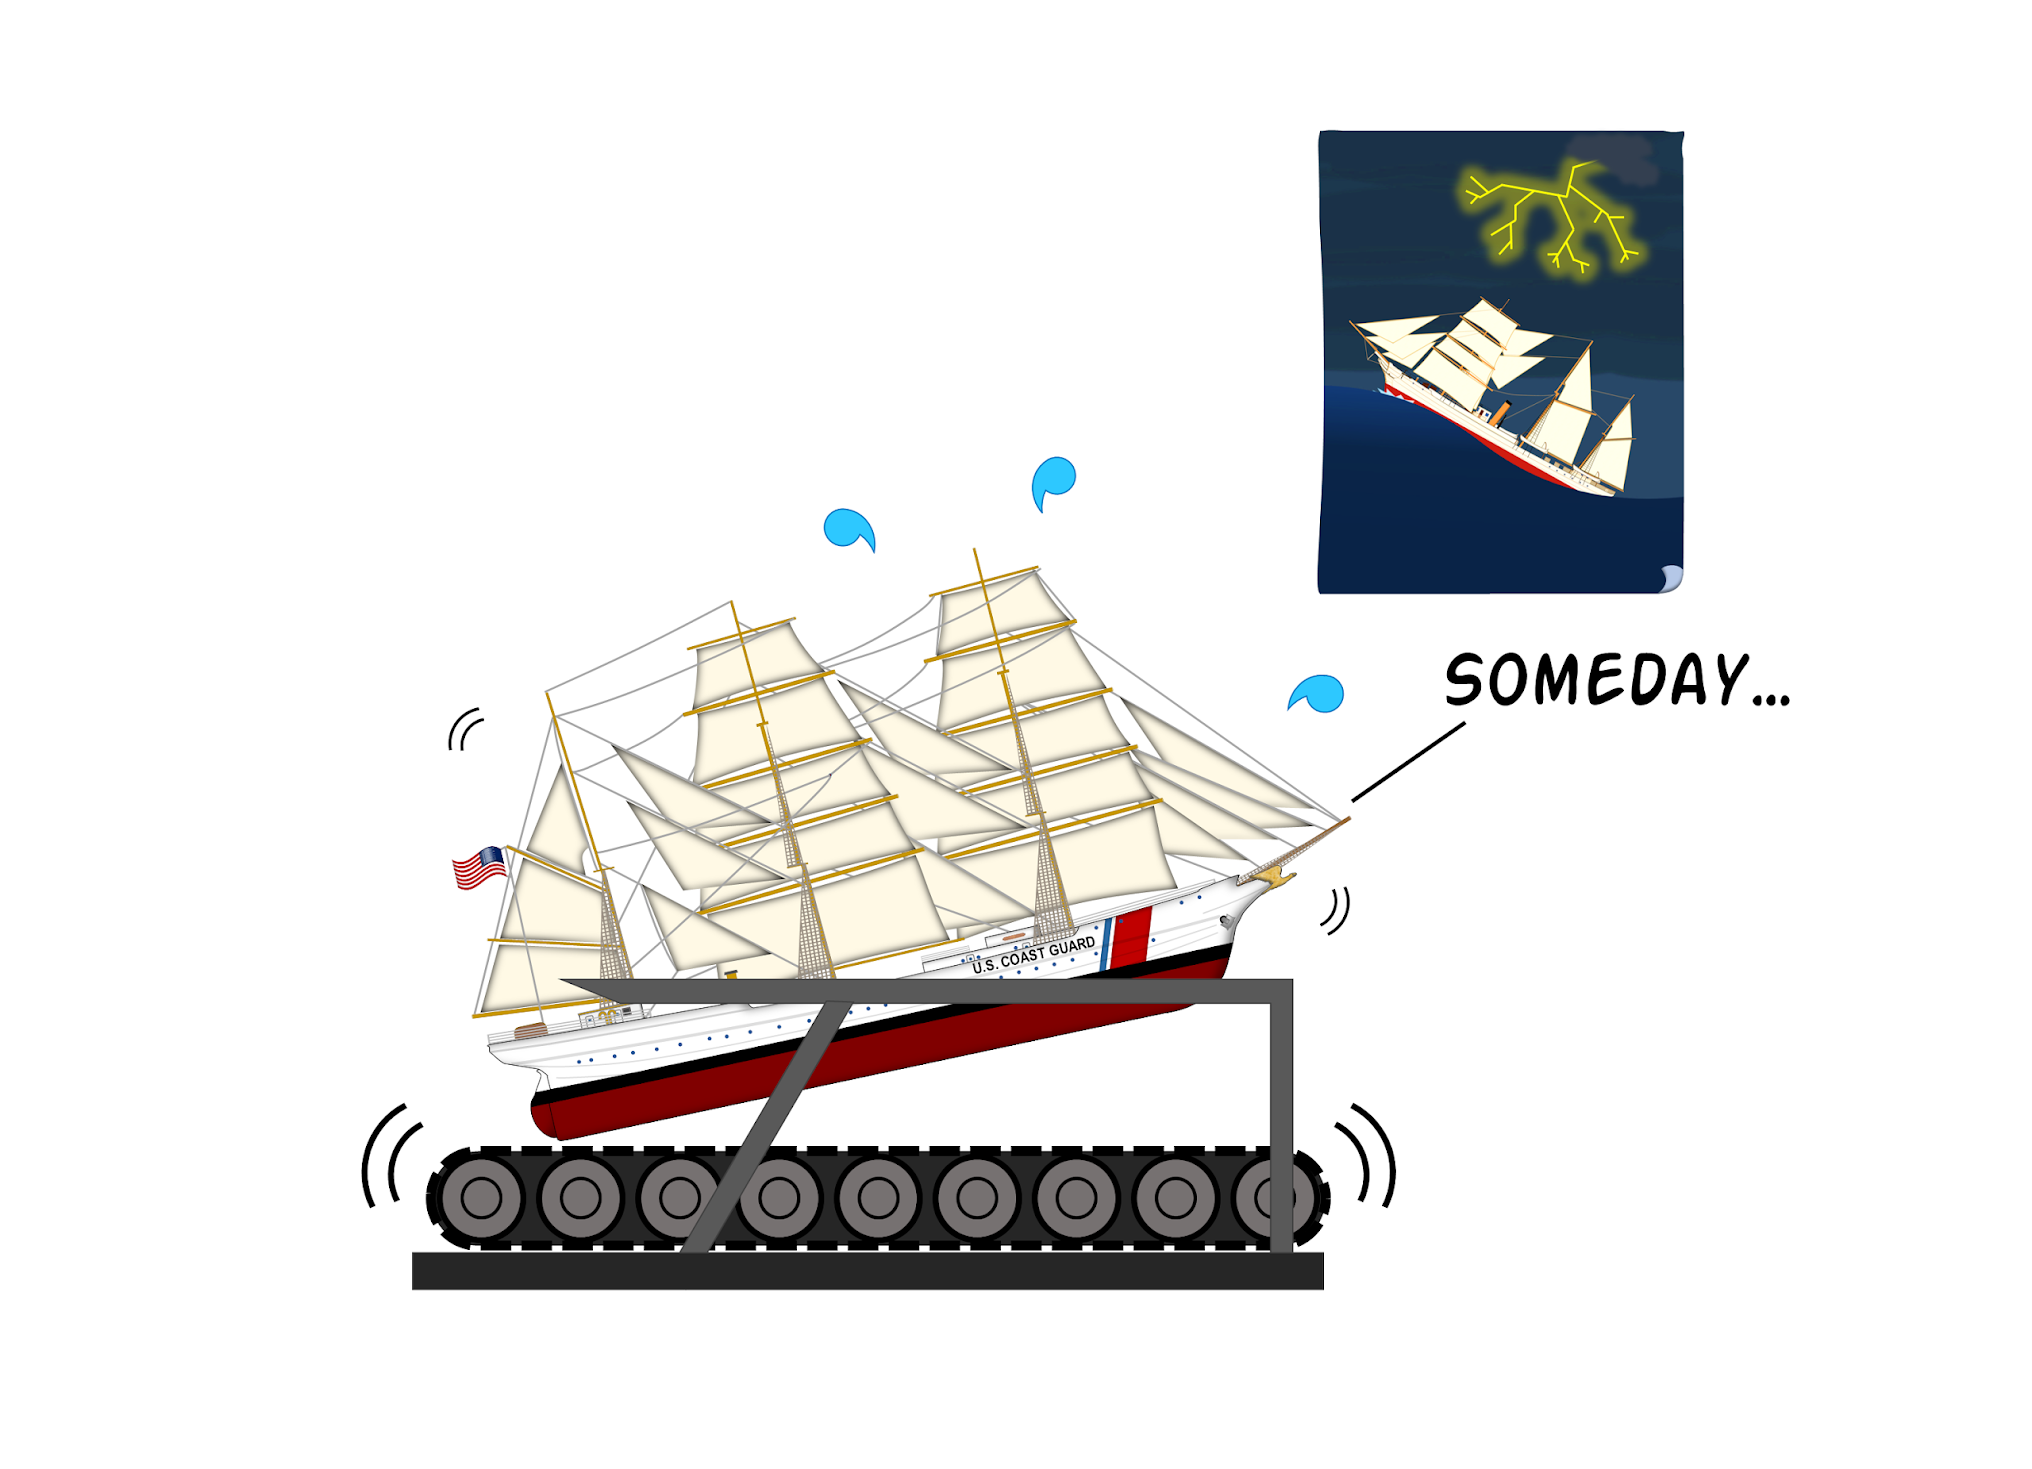 USCGC Eagle on treadmill. "Someday..."